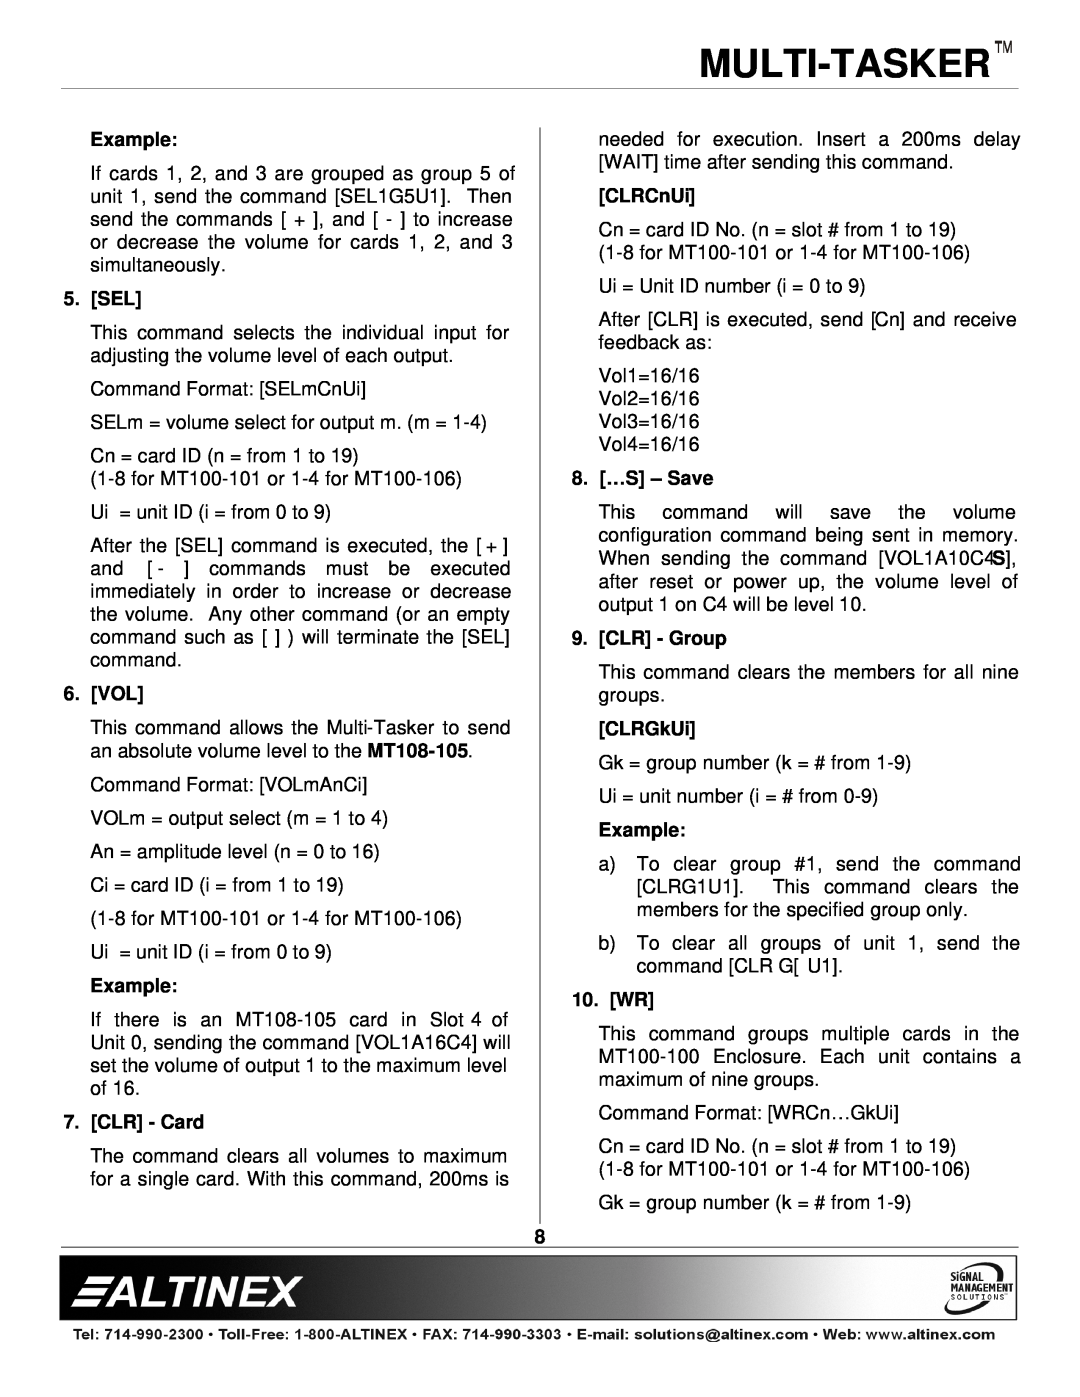 Altinex MT108-105 manual Sel, Vol, CLR - Card, CLRCnUi, 8. …S - Save, CLR - Group, CLRGkUi, 10. WR, Multi-Tasker, Example 